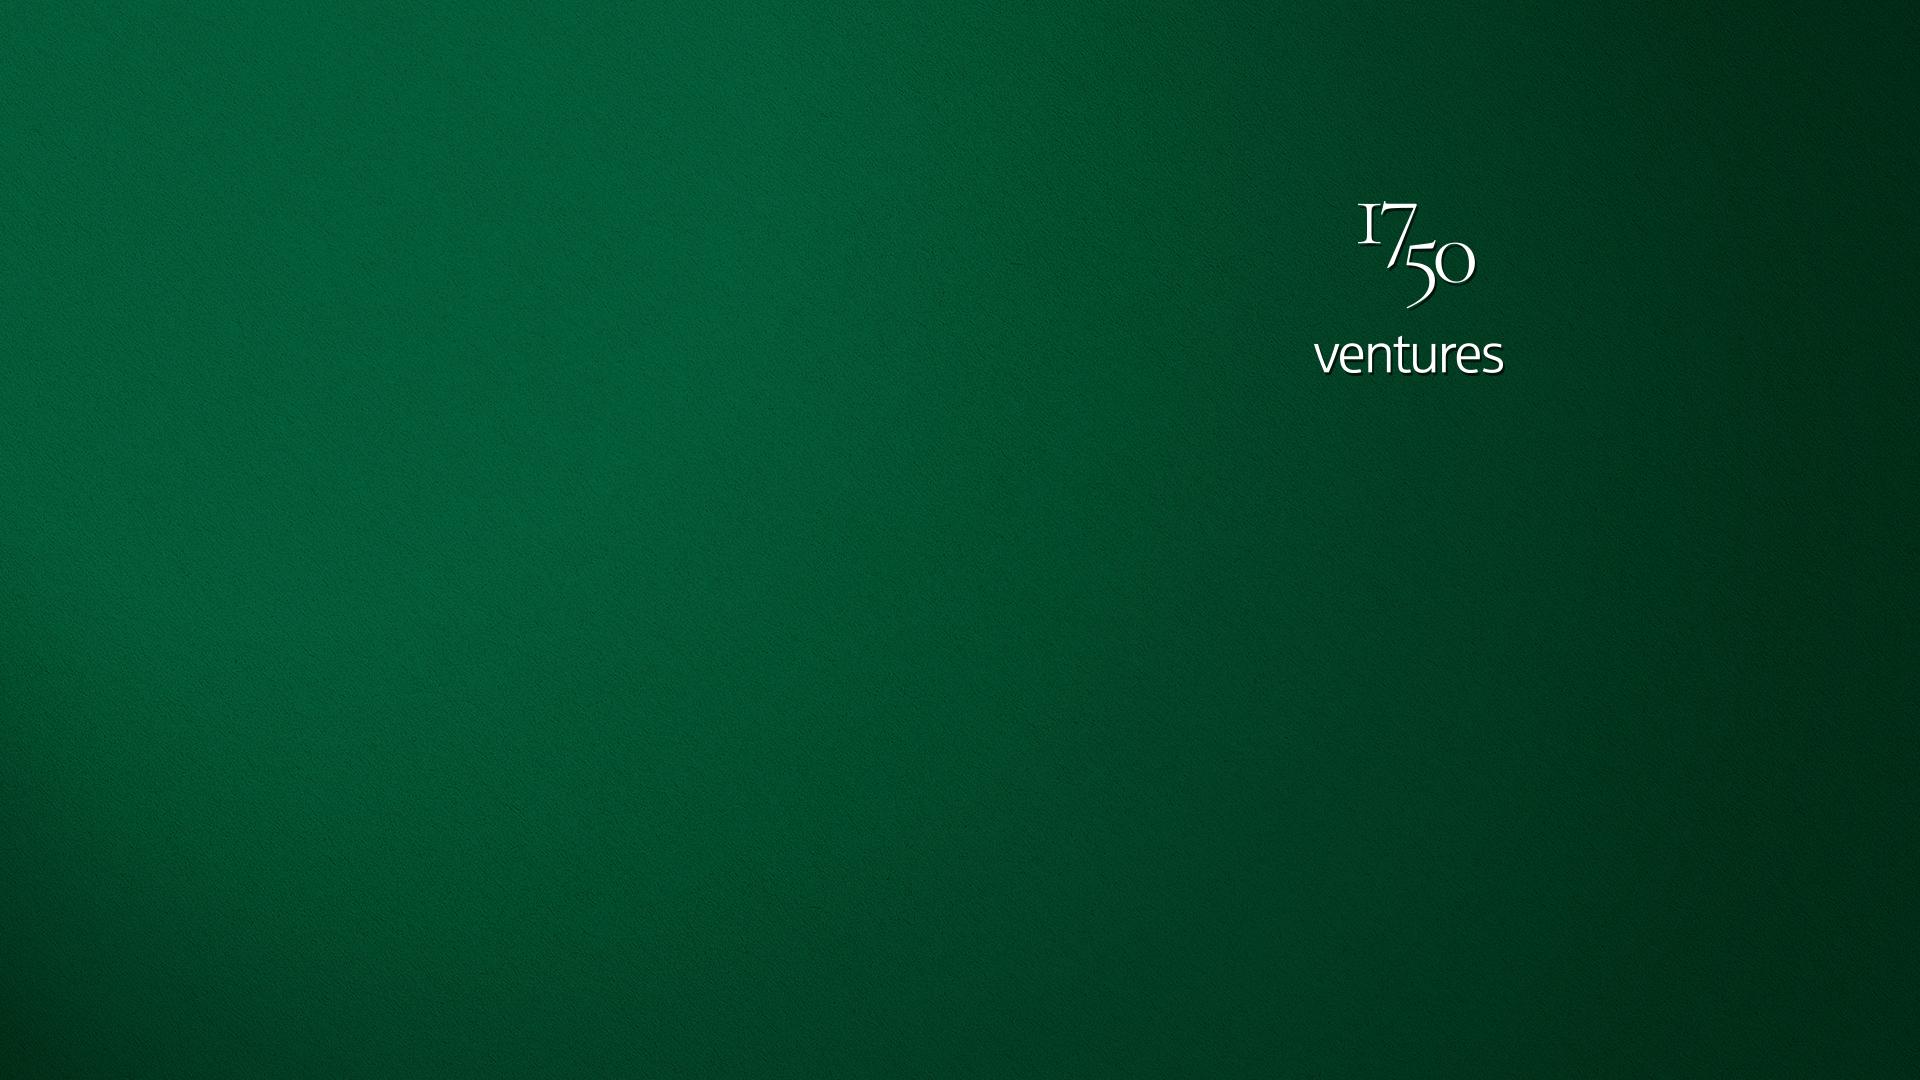 1750 Ventures / investor from Hannover / Background